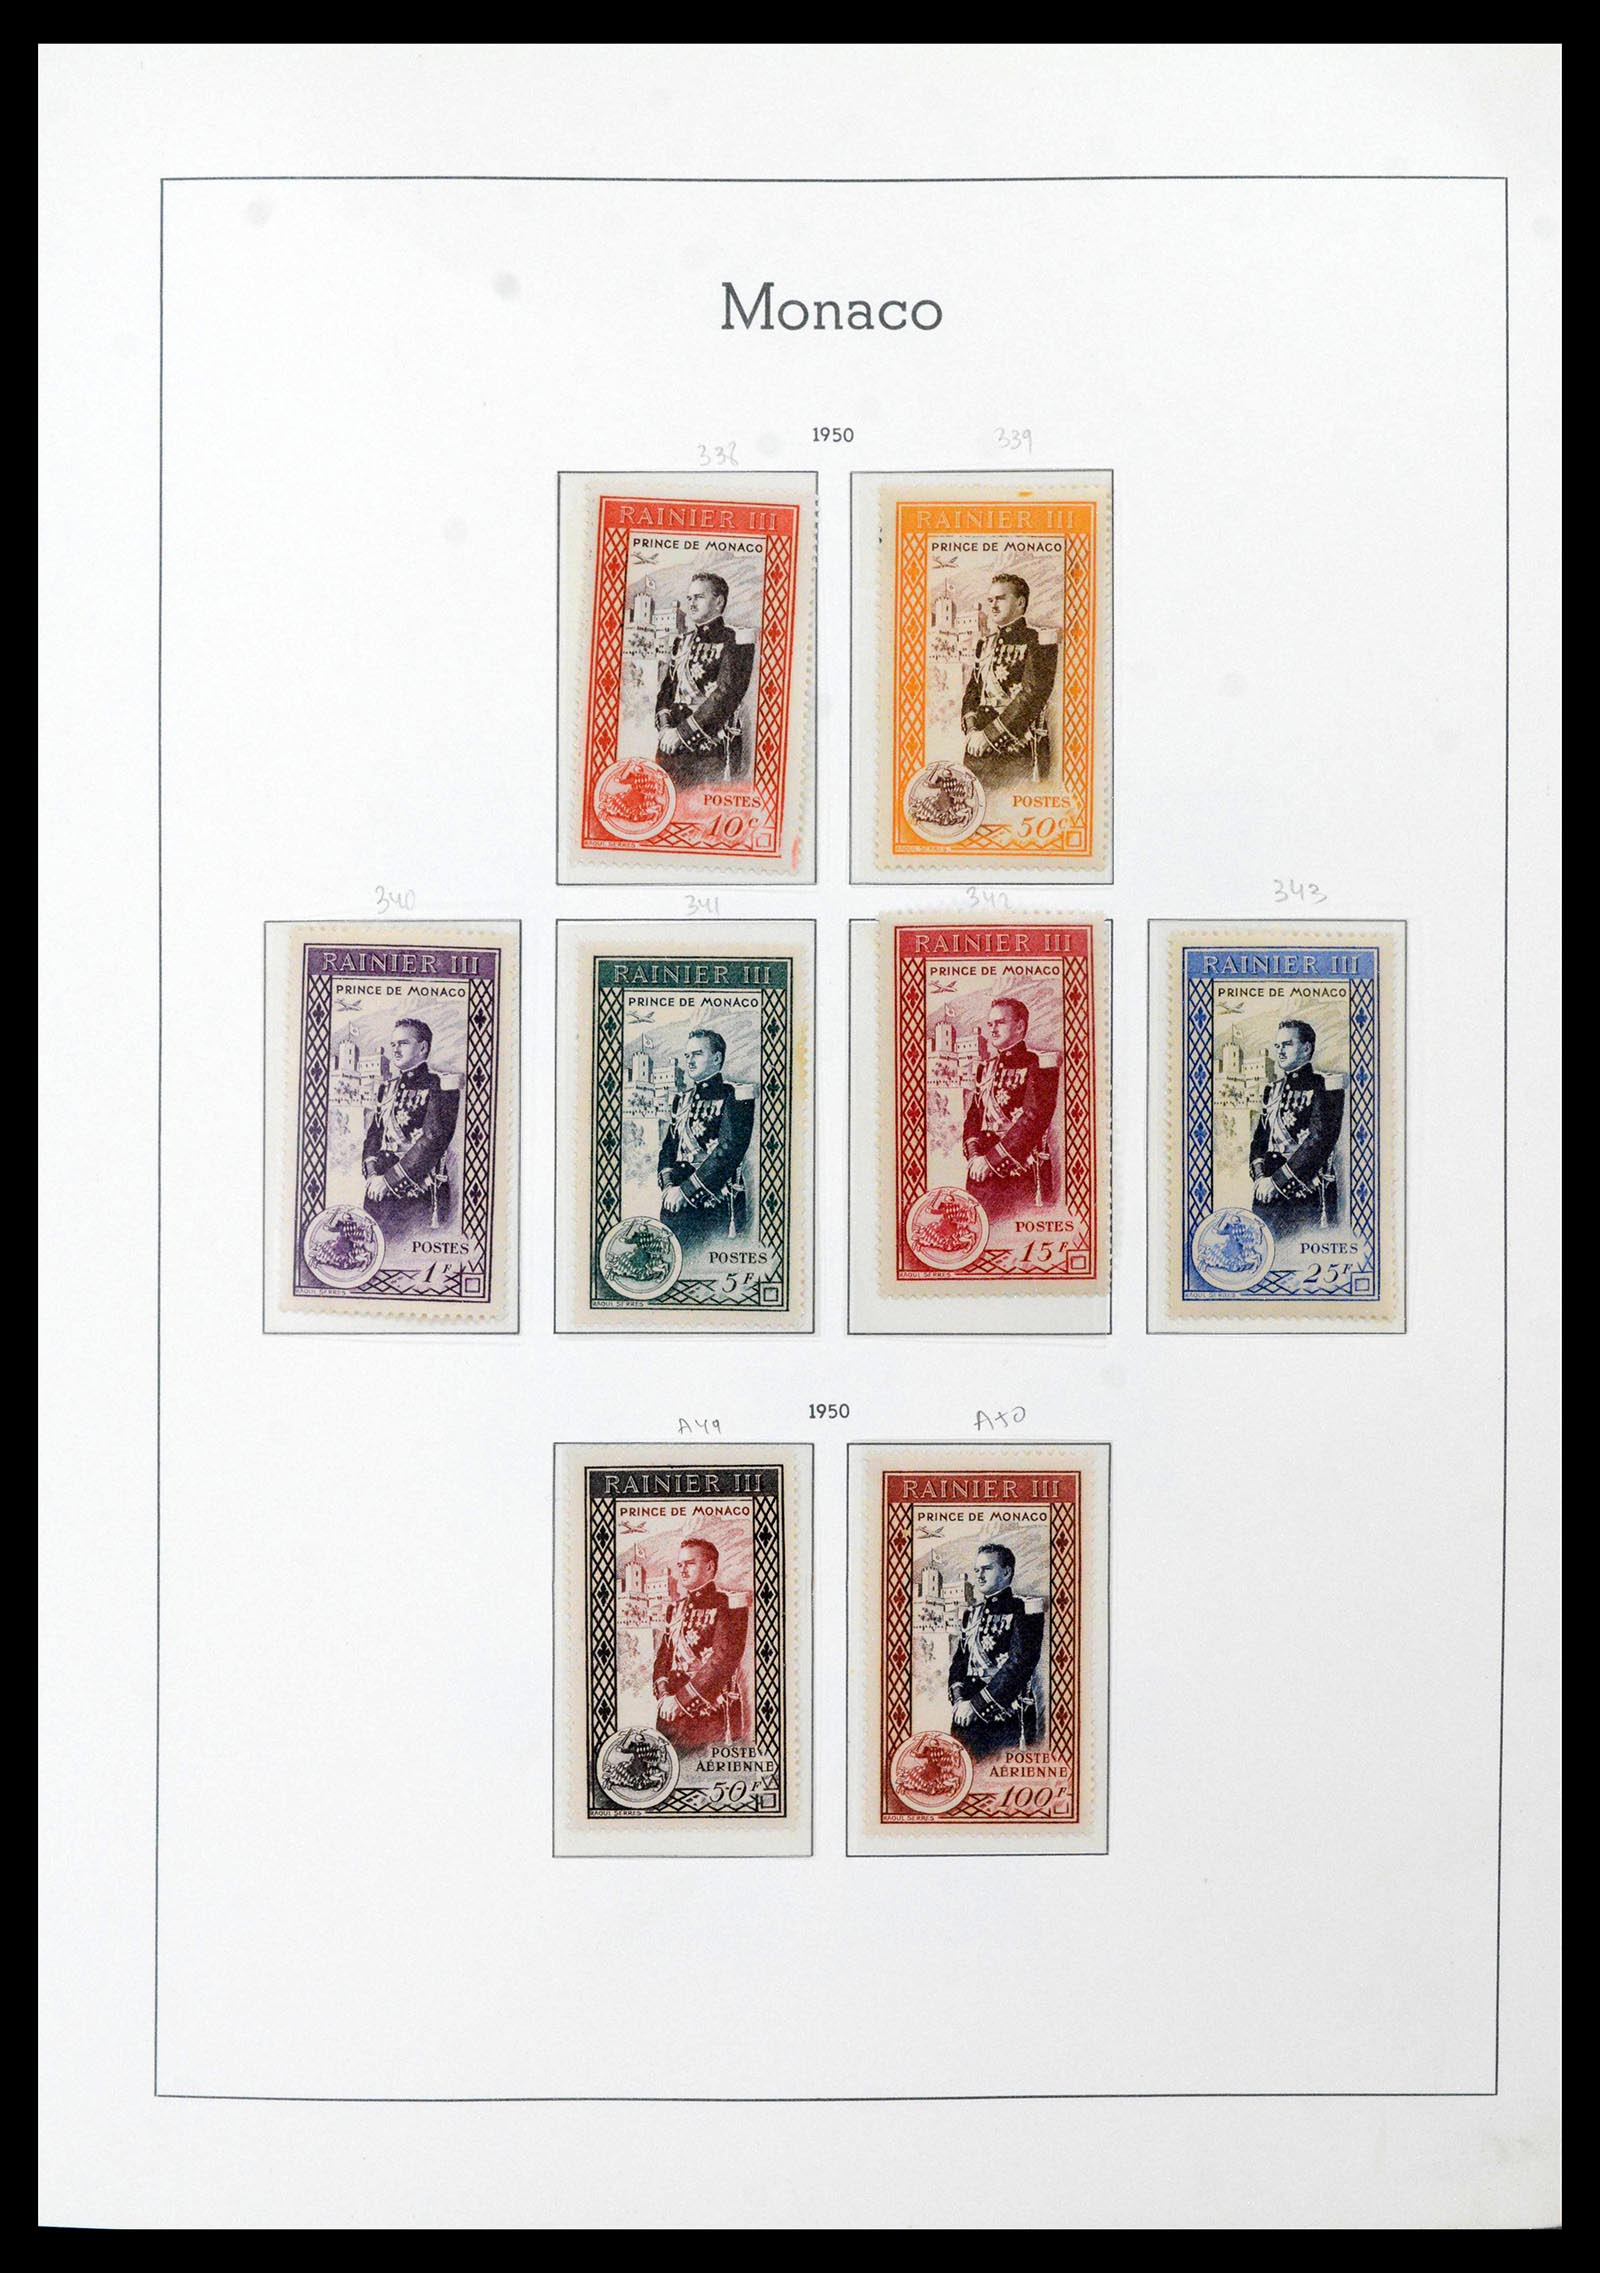 39250 0042 - Stamp collection 39250 Monaco 1885-1995.